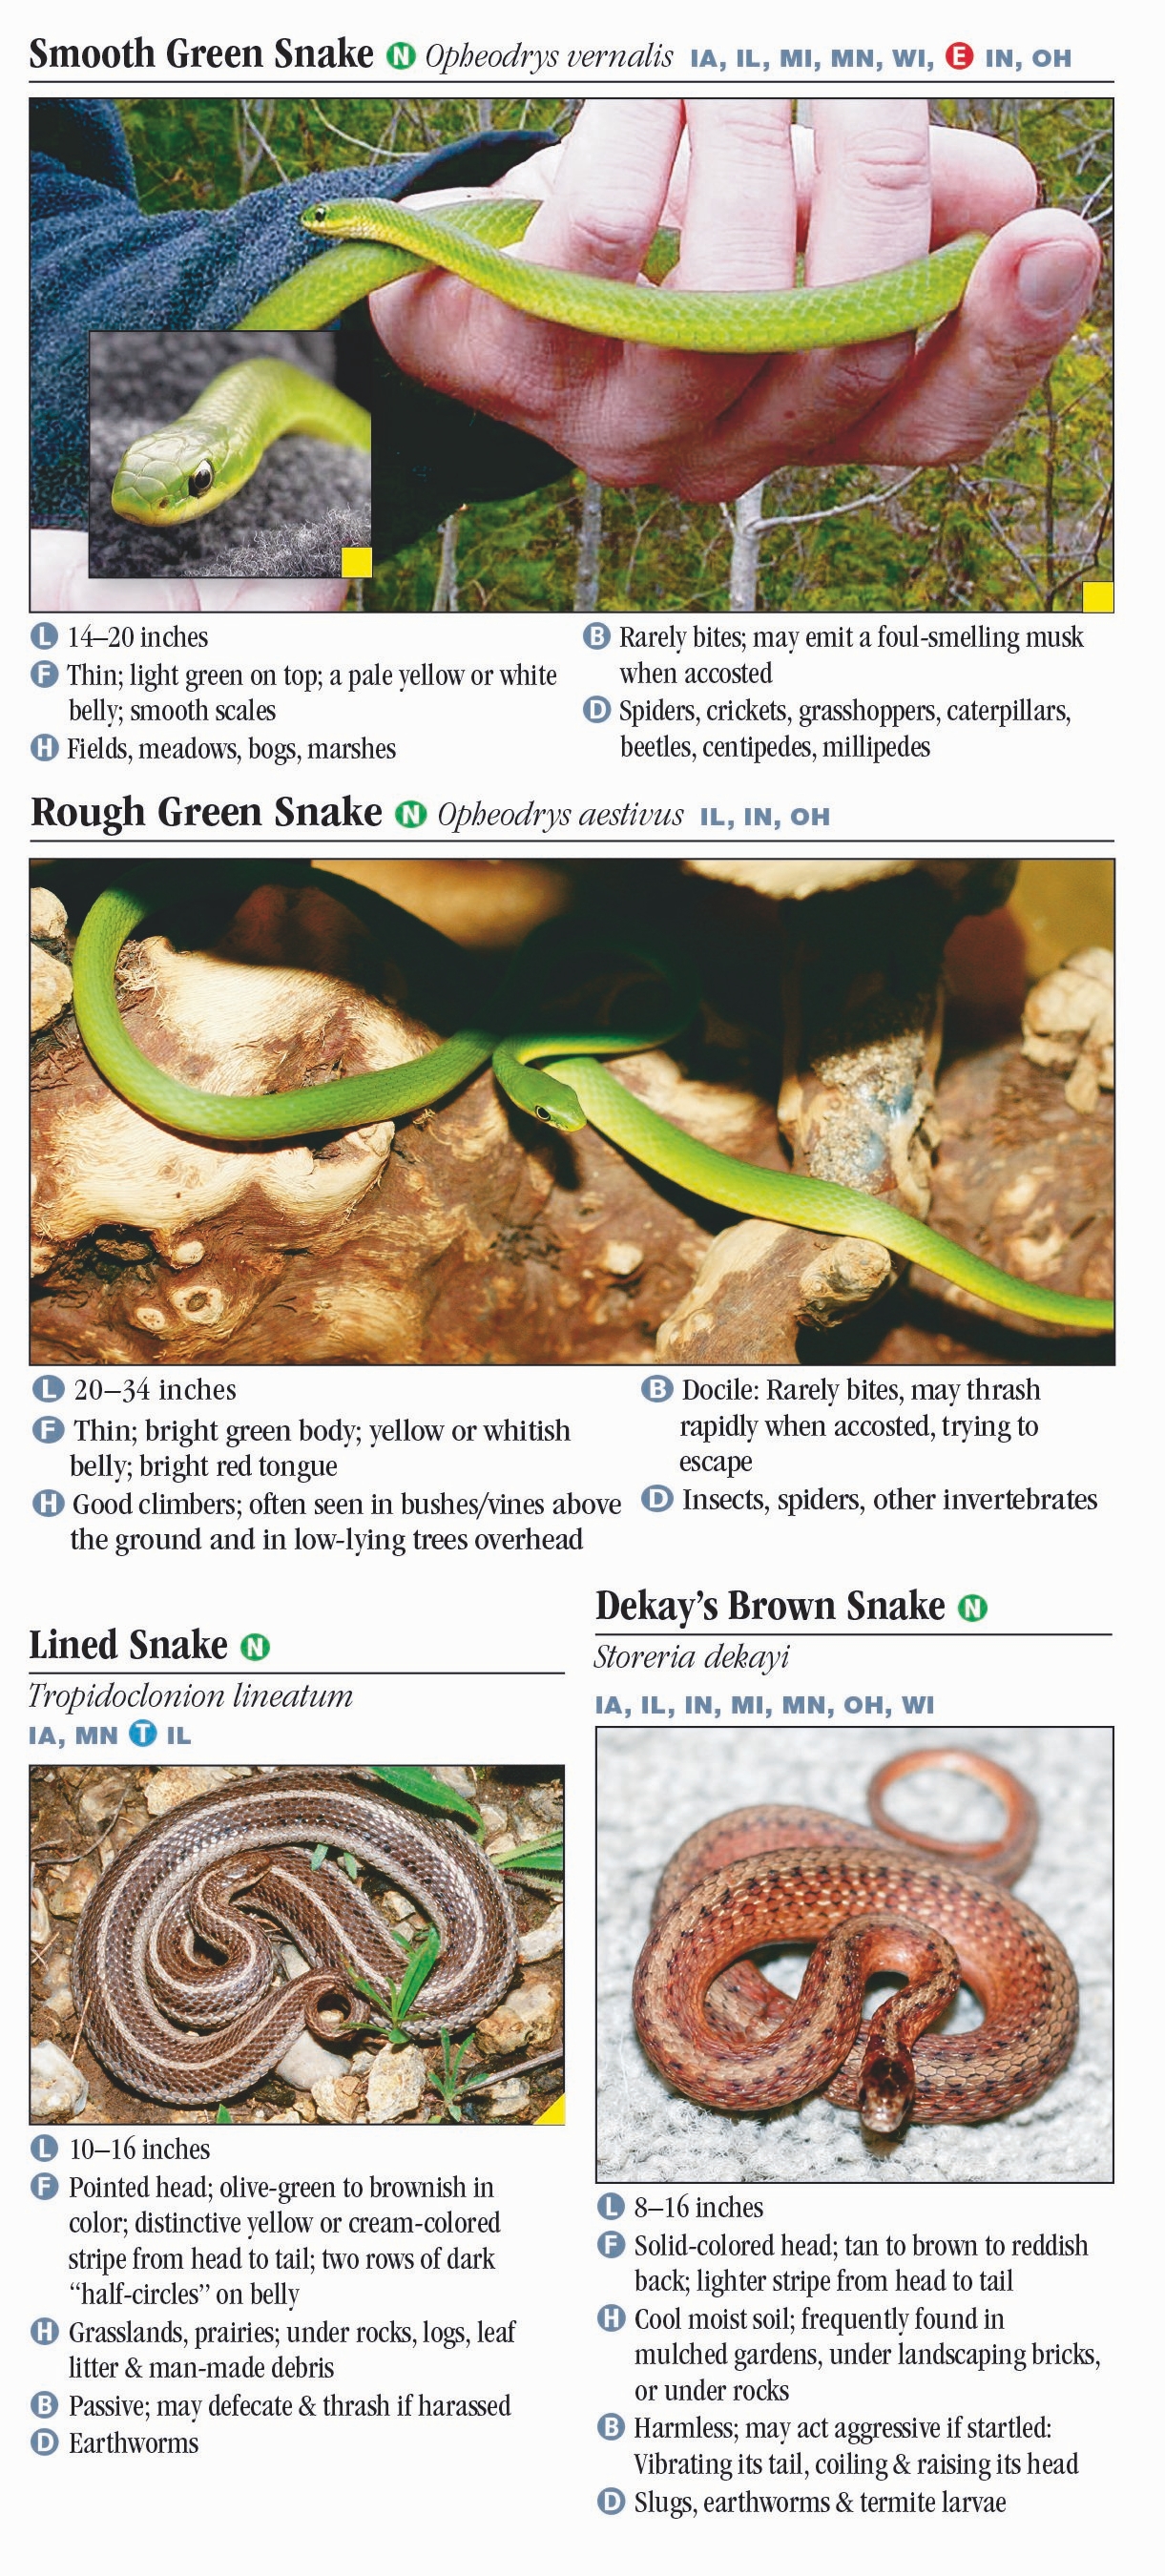 Lined Snake (Tropidoclonion lineatum) - Minnesota Amphibian & Reptile Survey